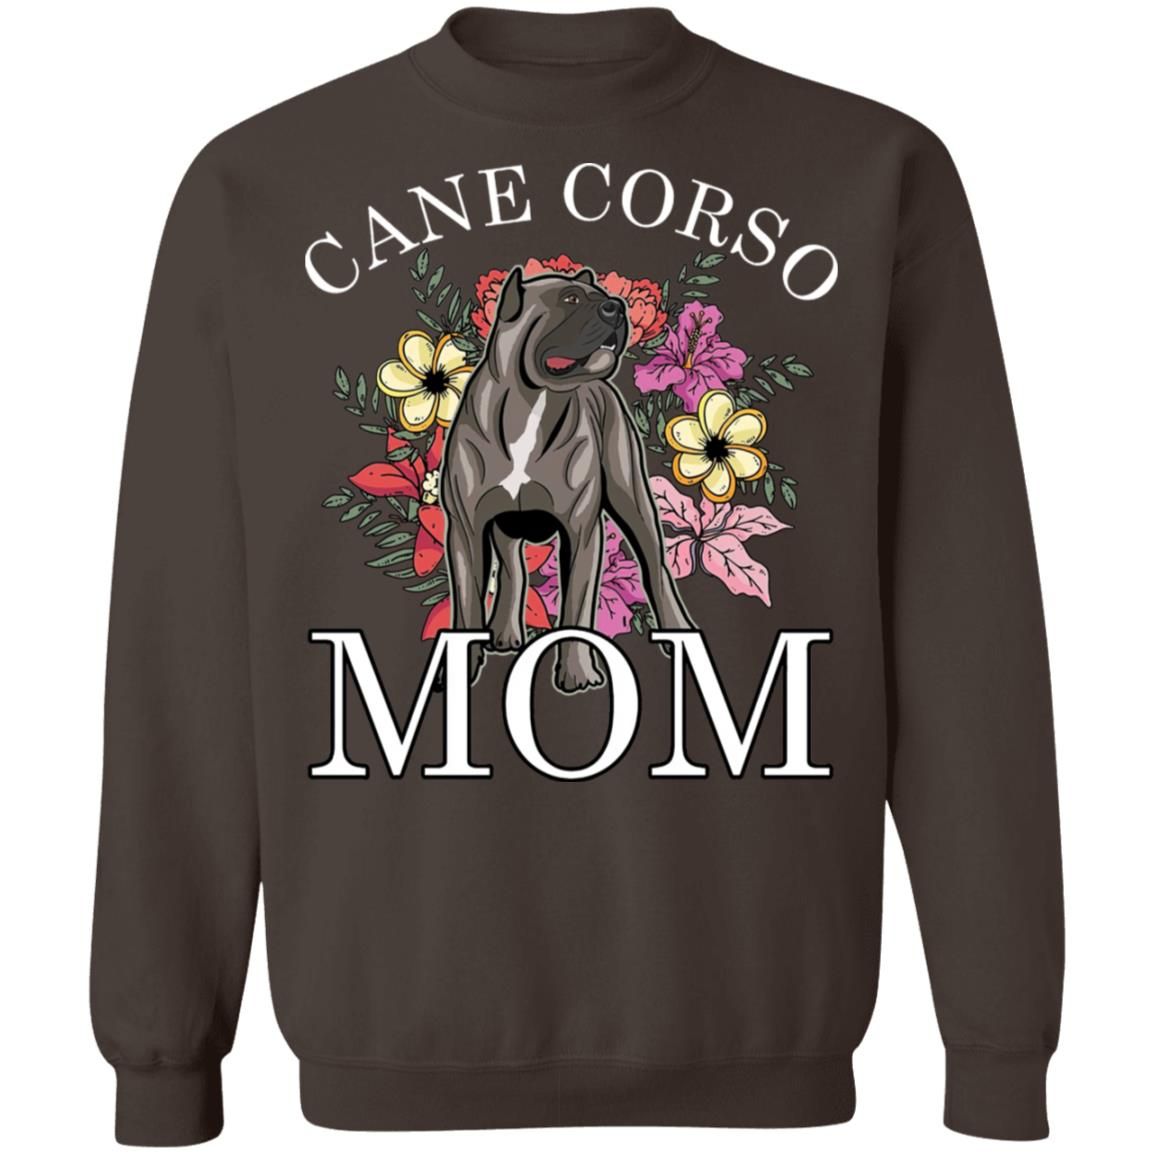 Cane Corso Mom Christmas Sweatshirt Style: Sweatshirt, Color: Dark Chocolate